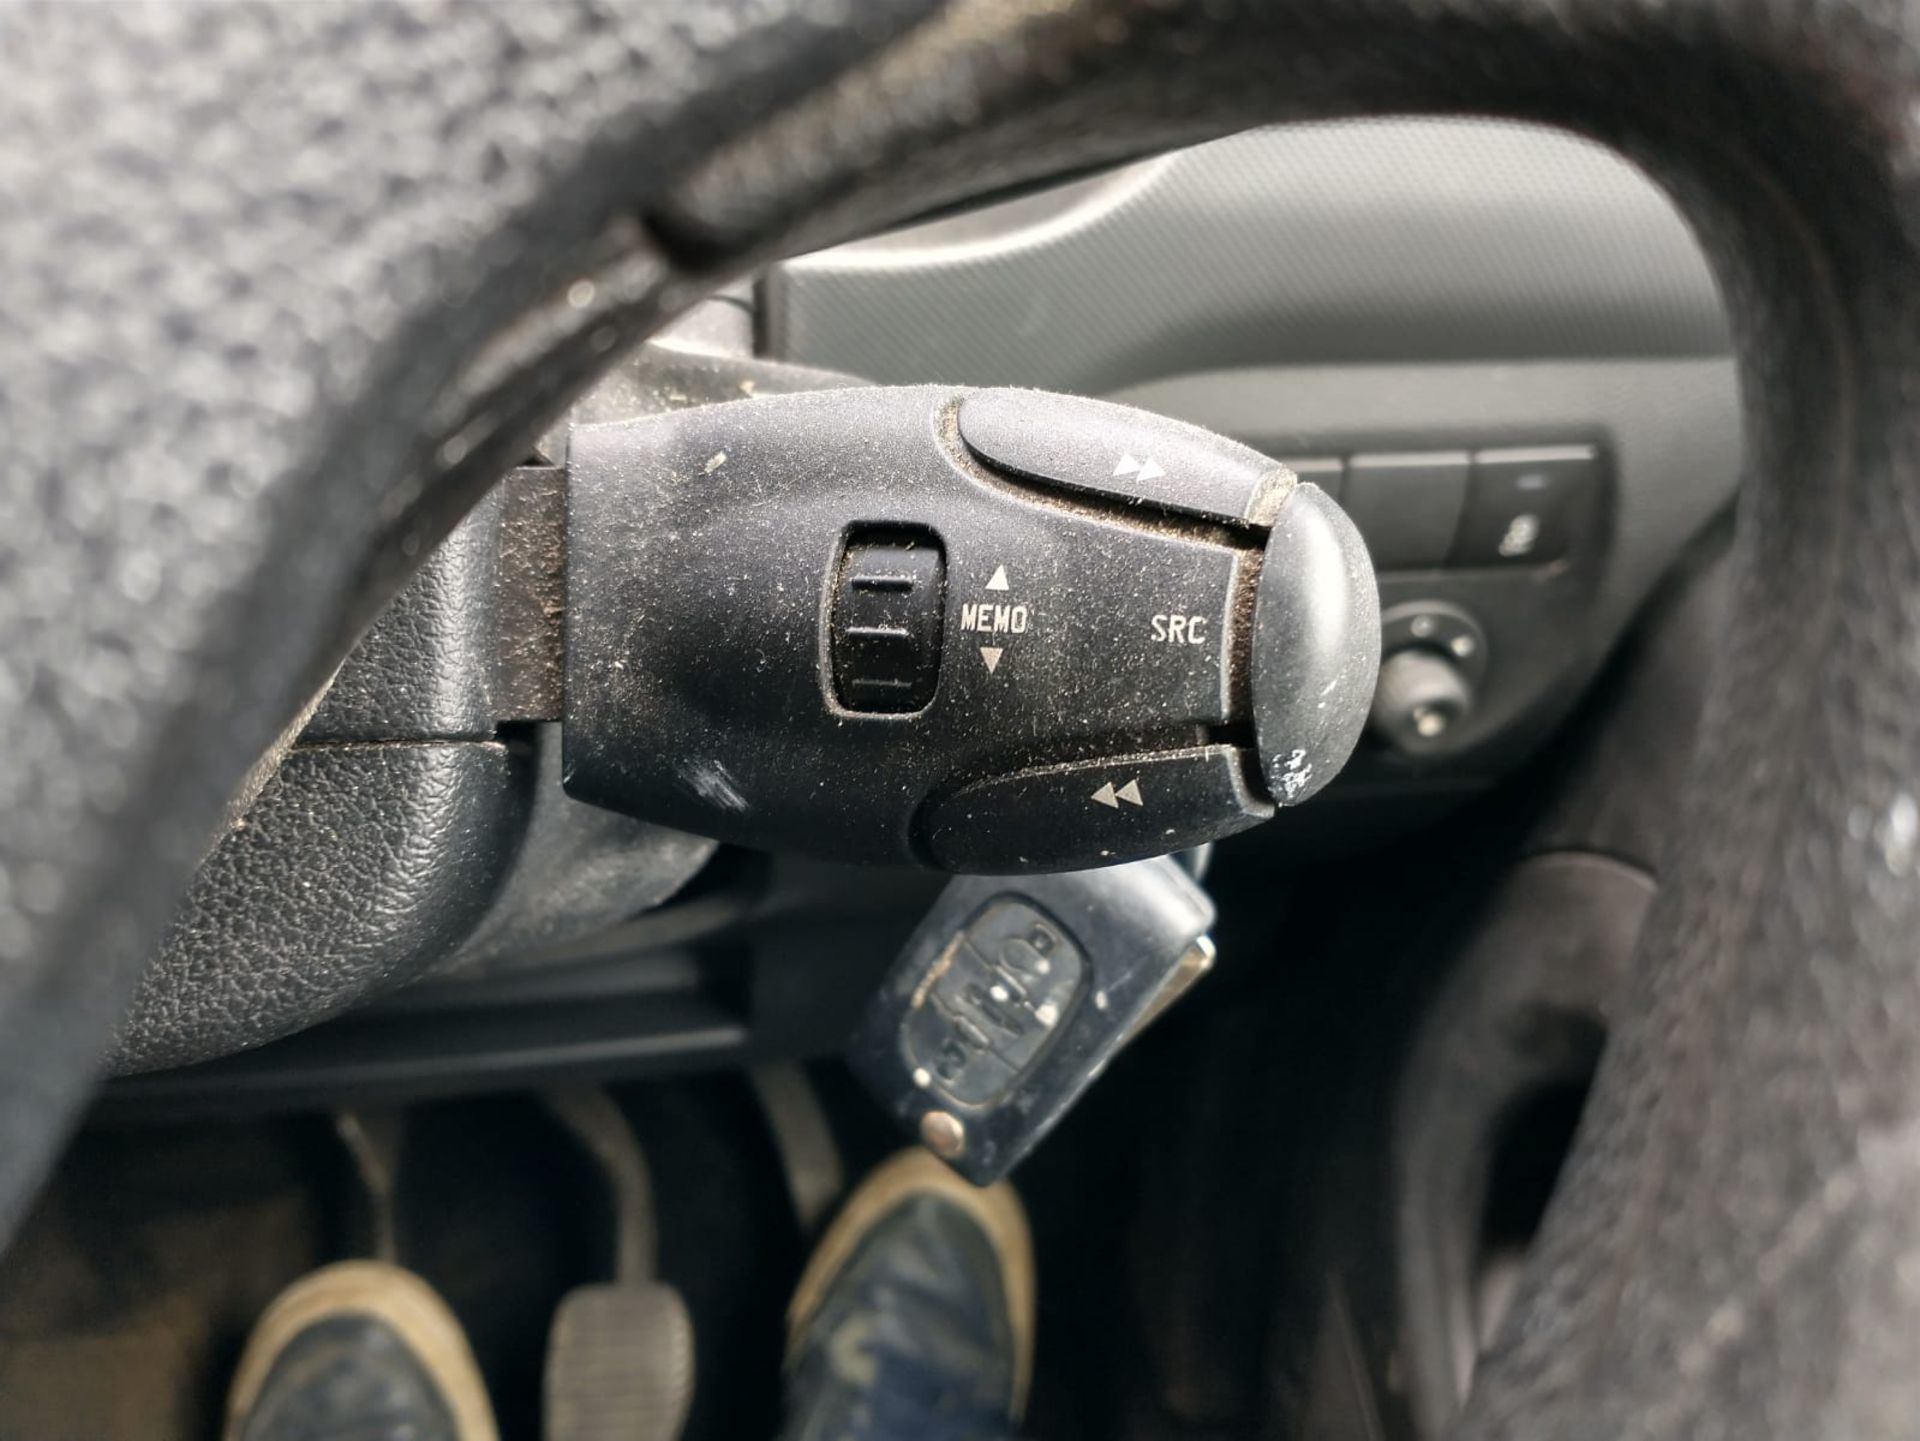 2015 Peugeot Partner Panel Van - CL505 - Location: Corby - Image 9 of 15